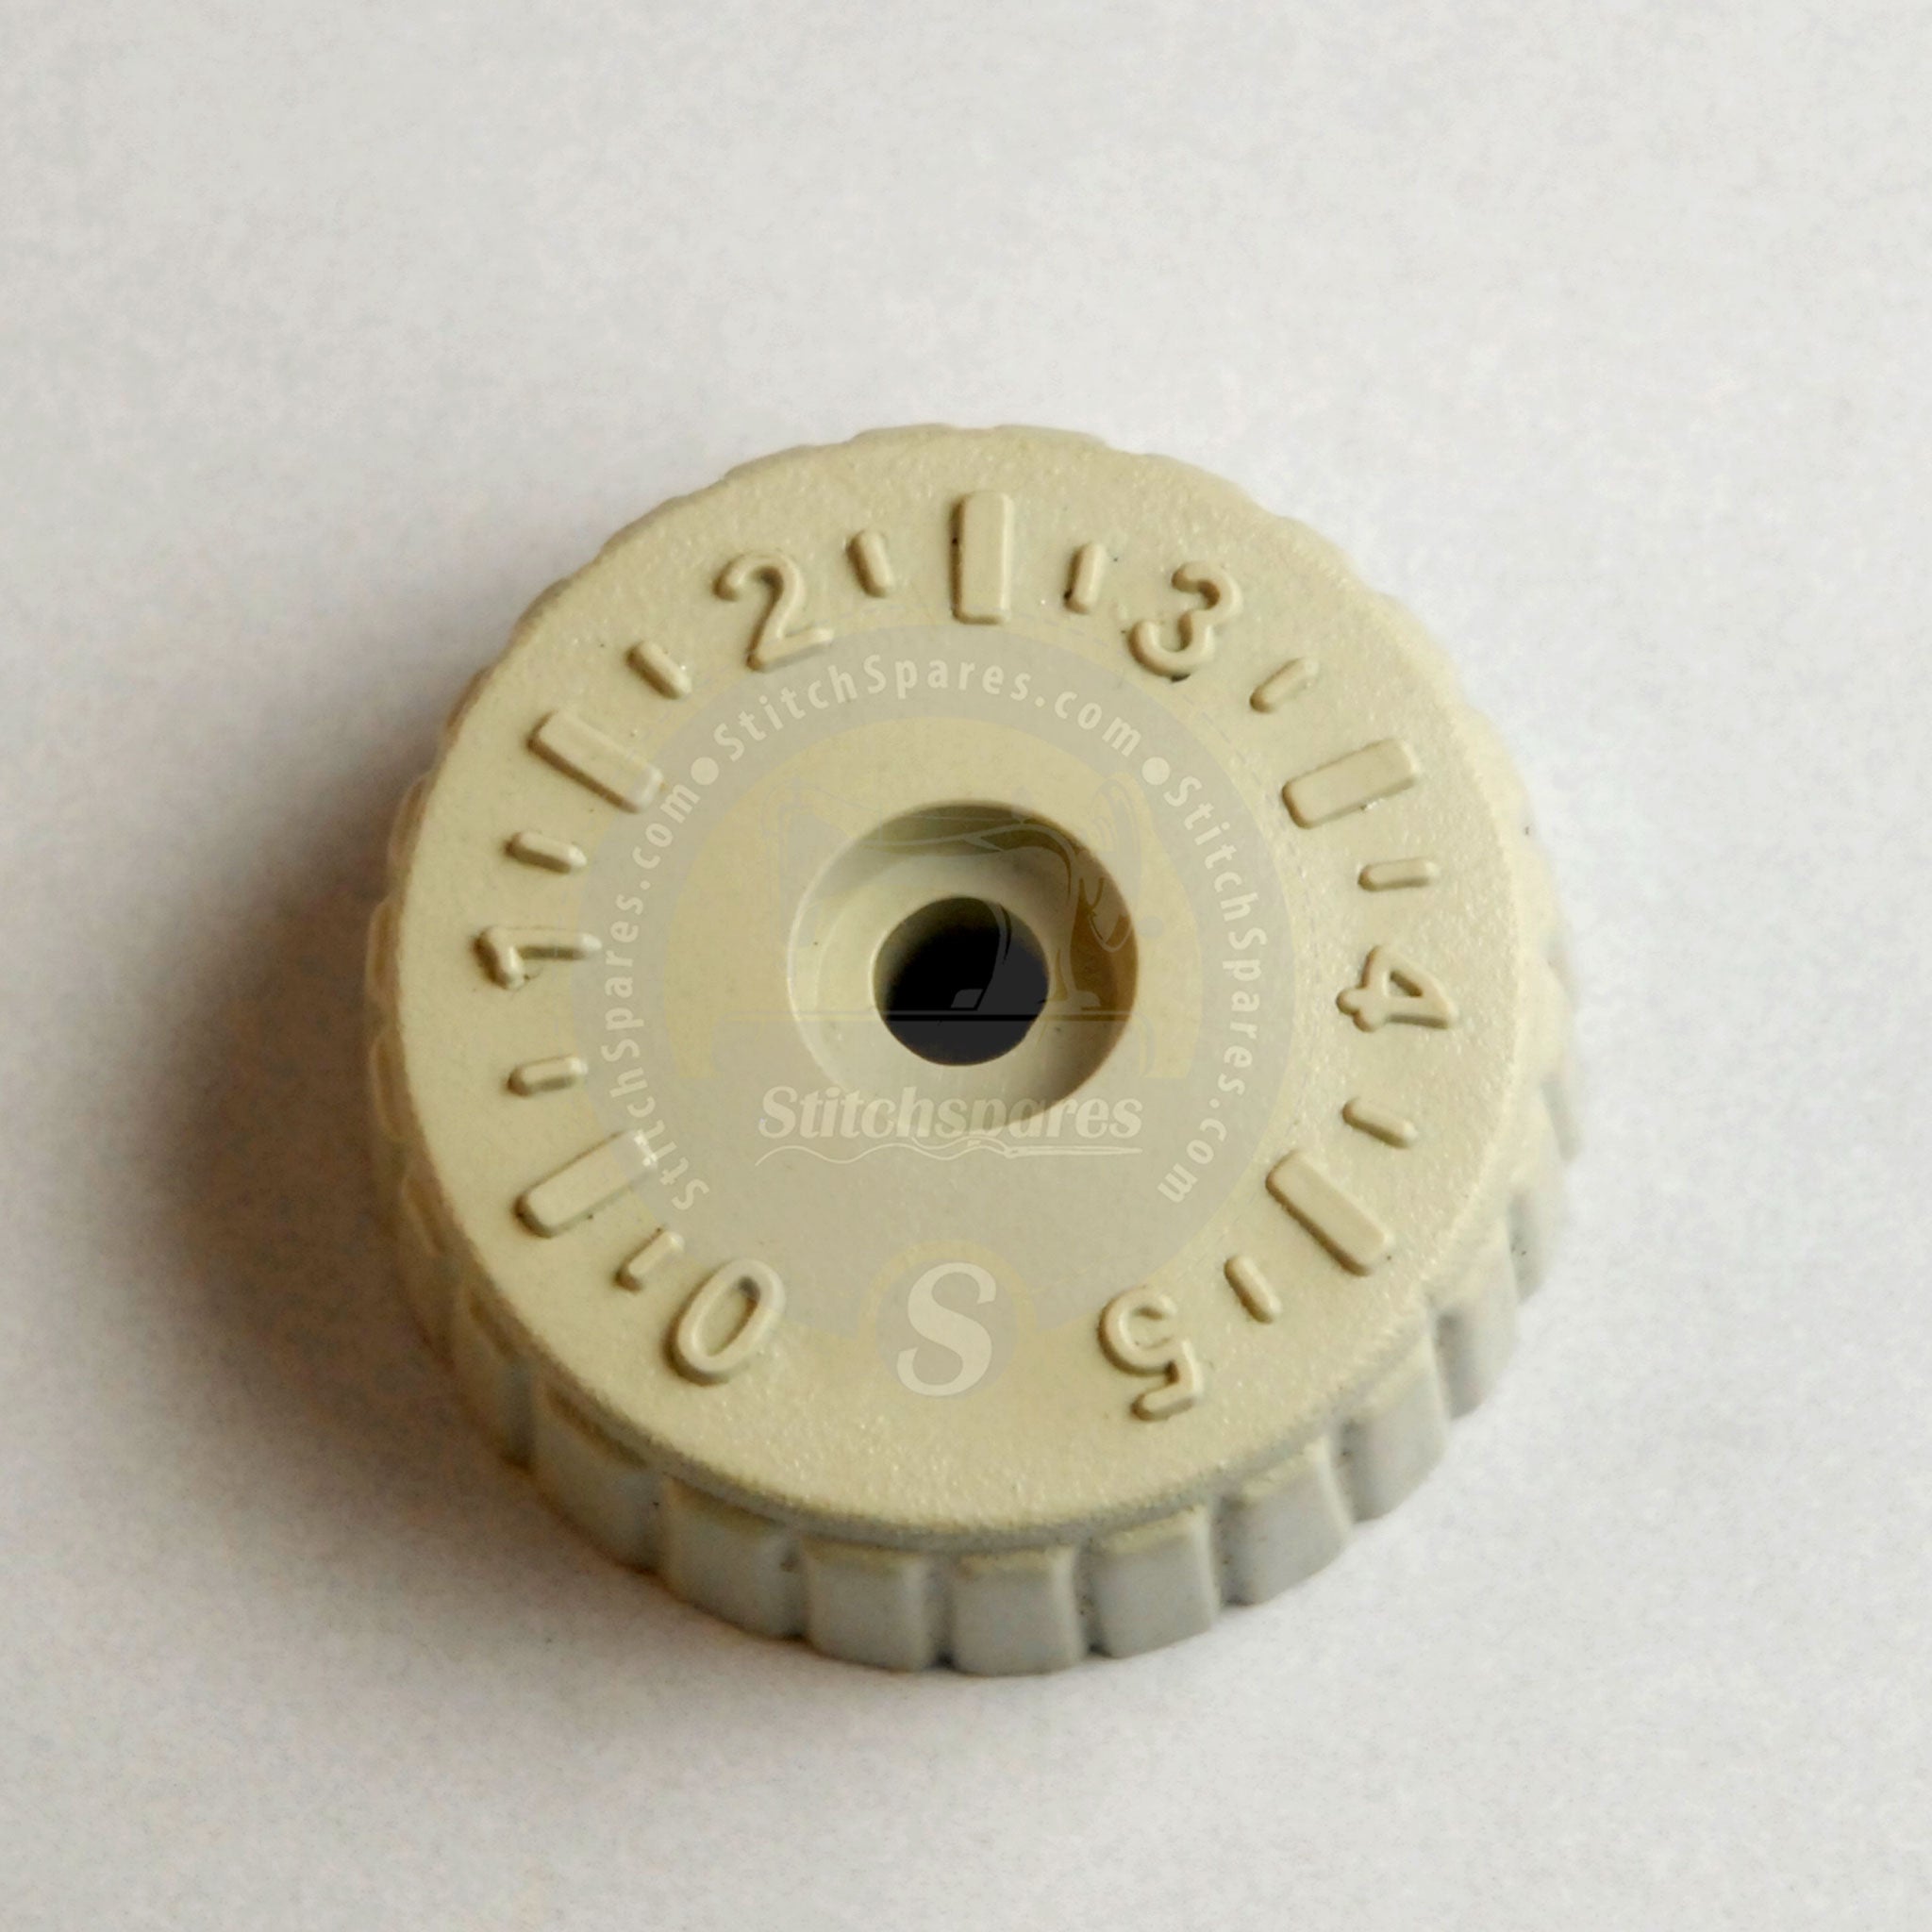 229-11903 Vorschubknopf Juki Single Needle Lock-Stitch Machine